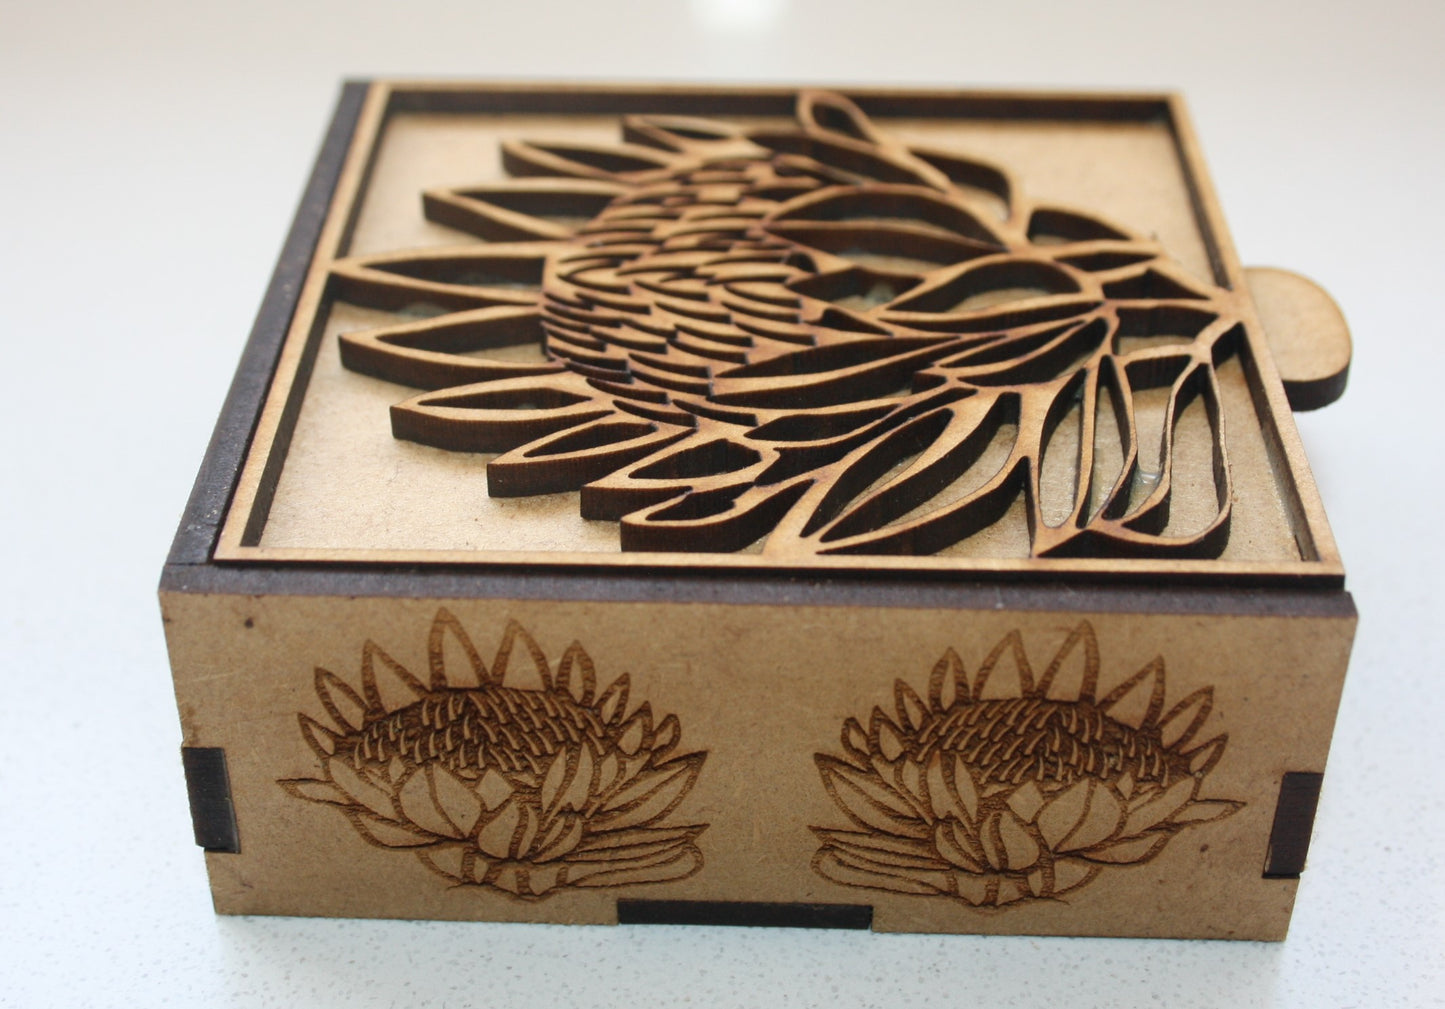 Protea seedpod necklace in Protea engraved gift box